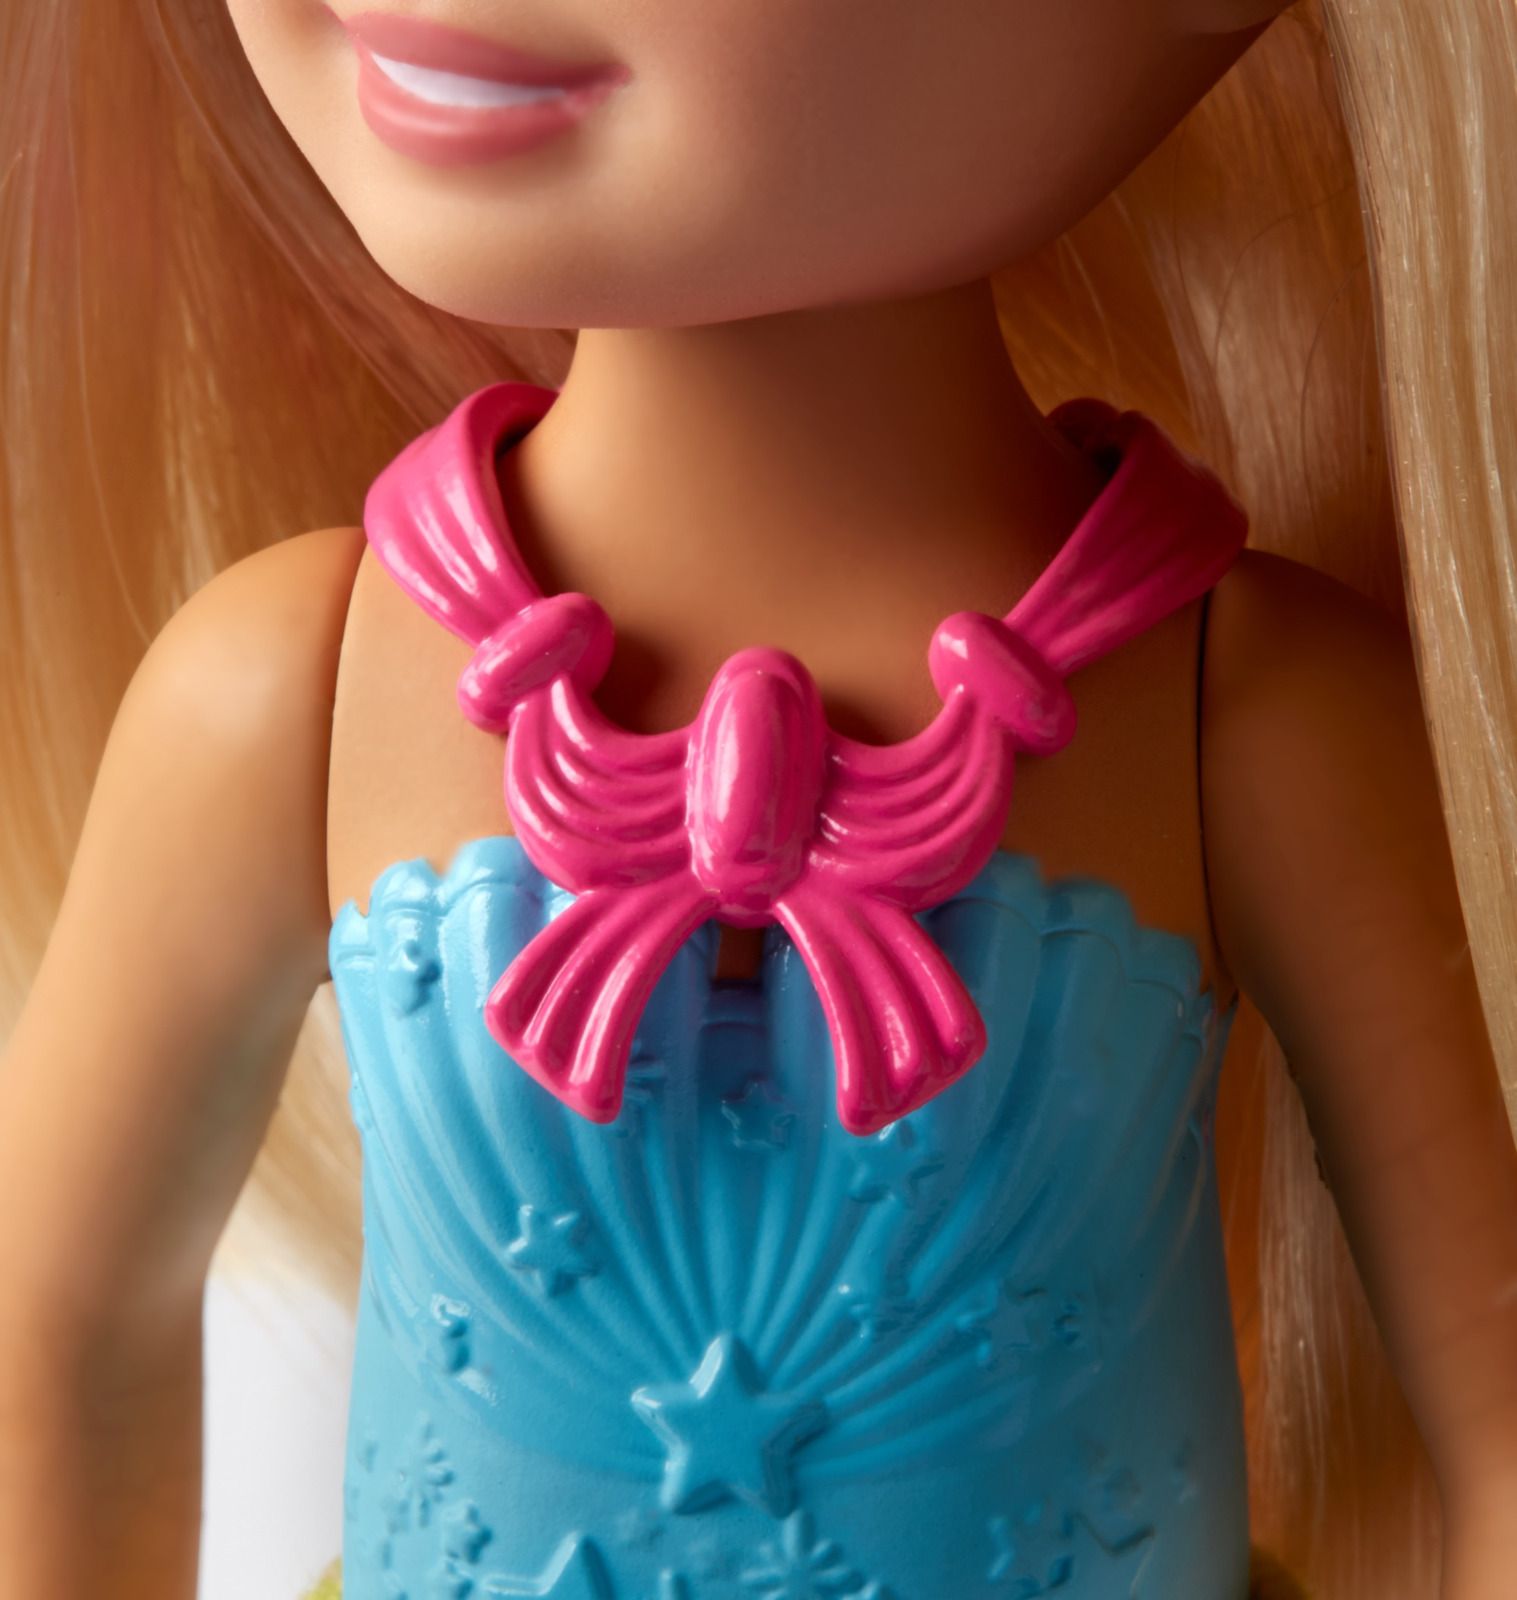 Barbie    